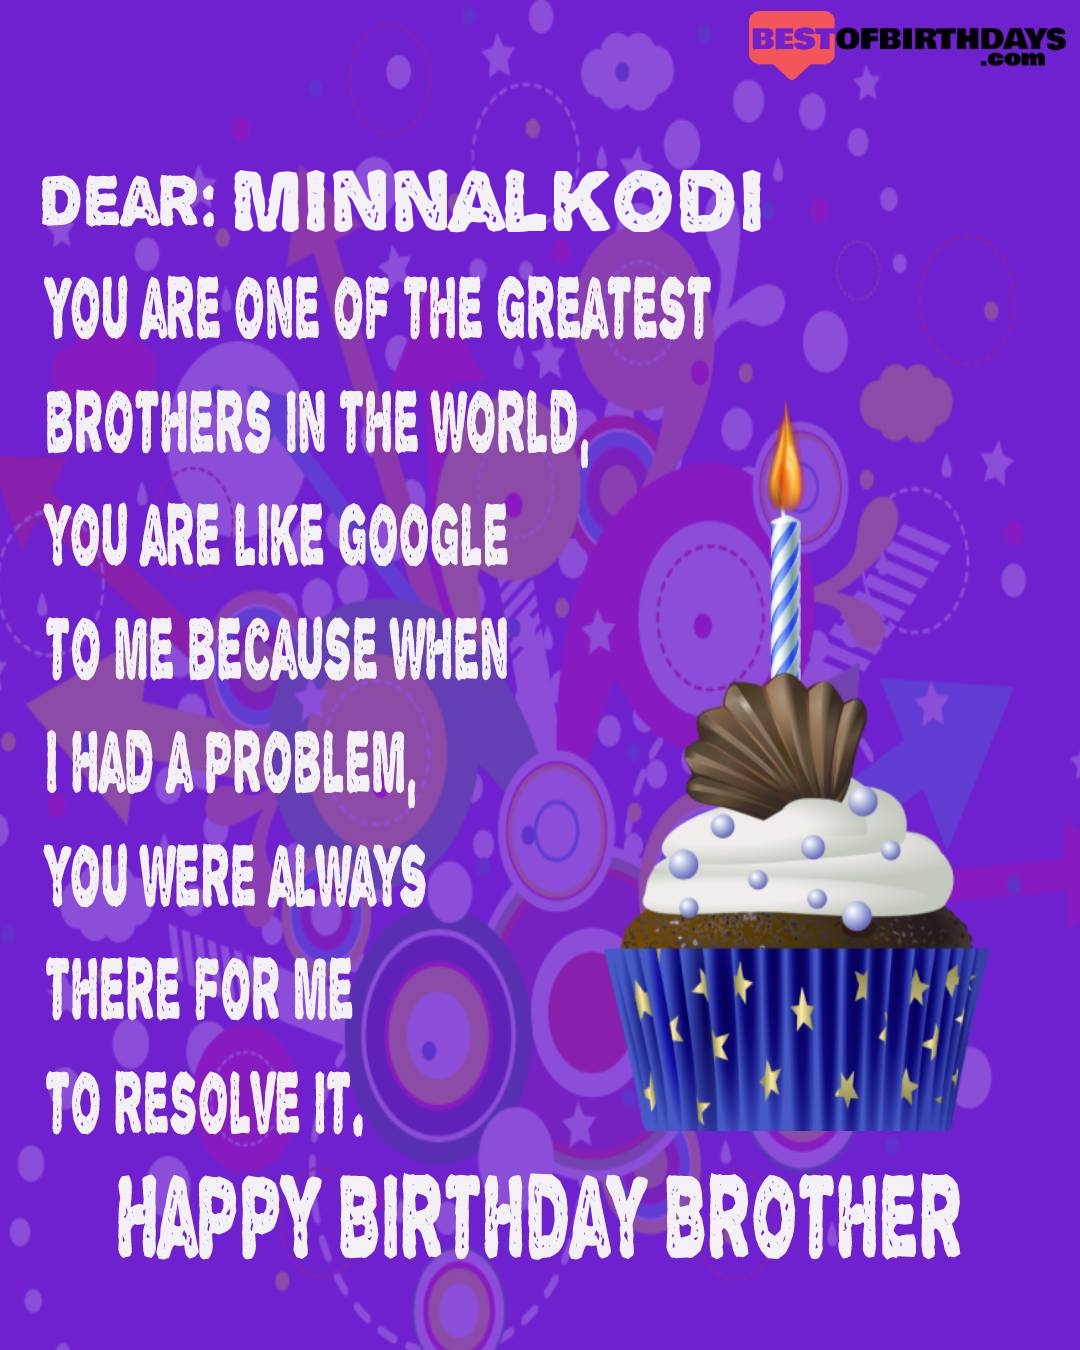 Happy birthday minnalkodi bhai brother bro